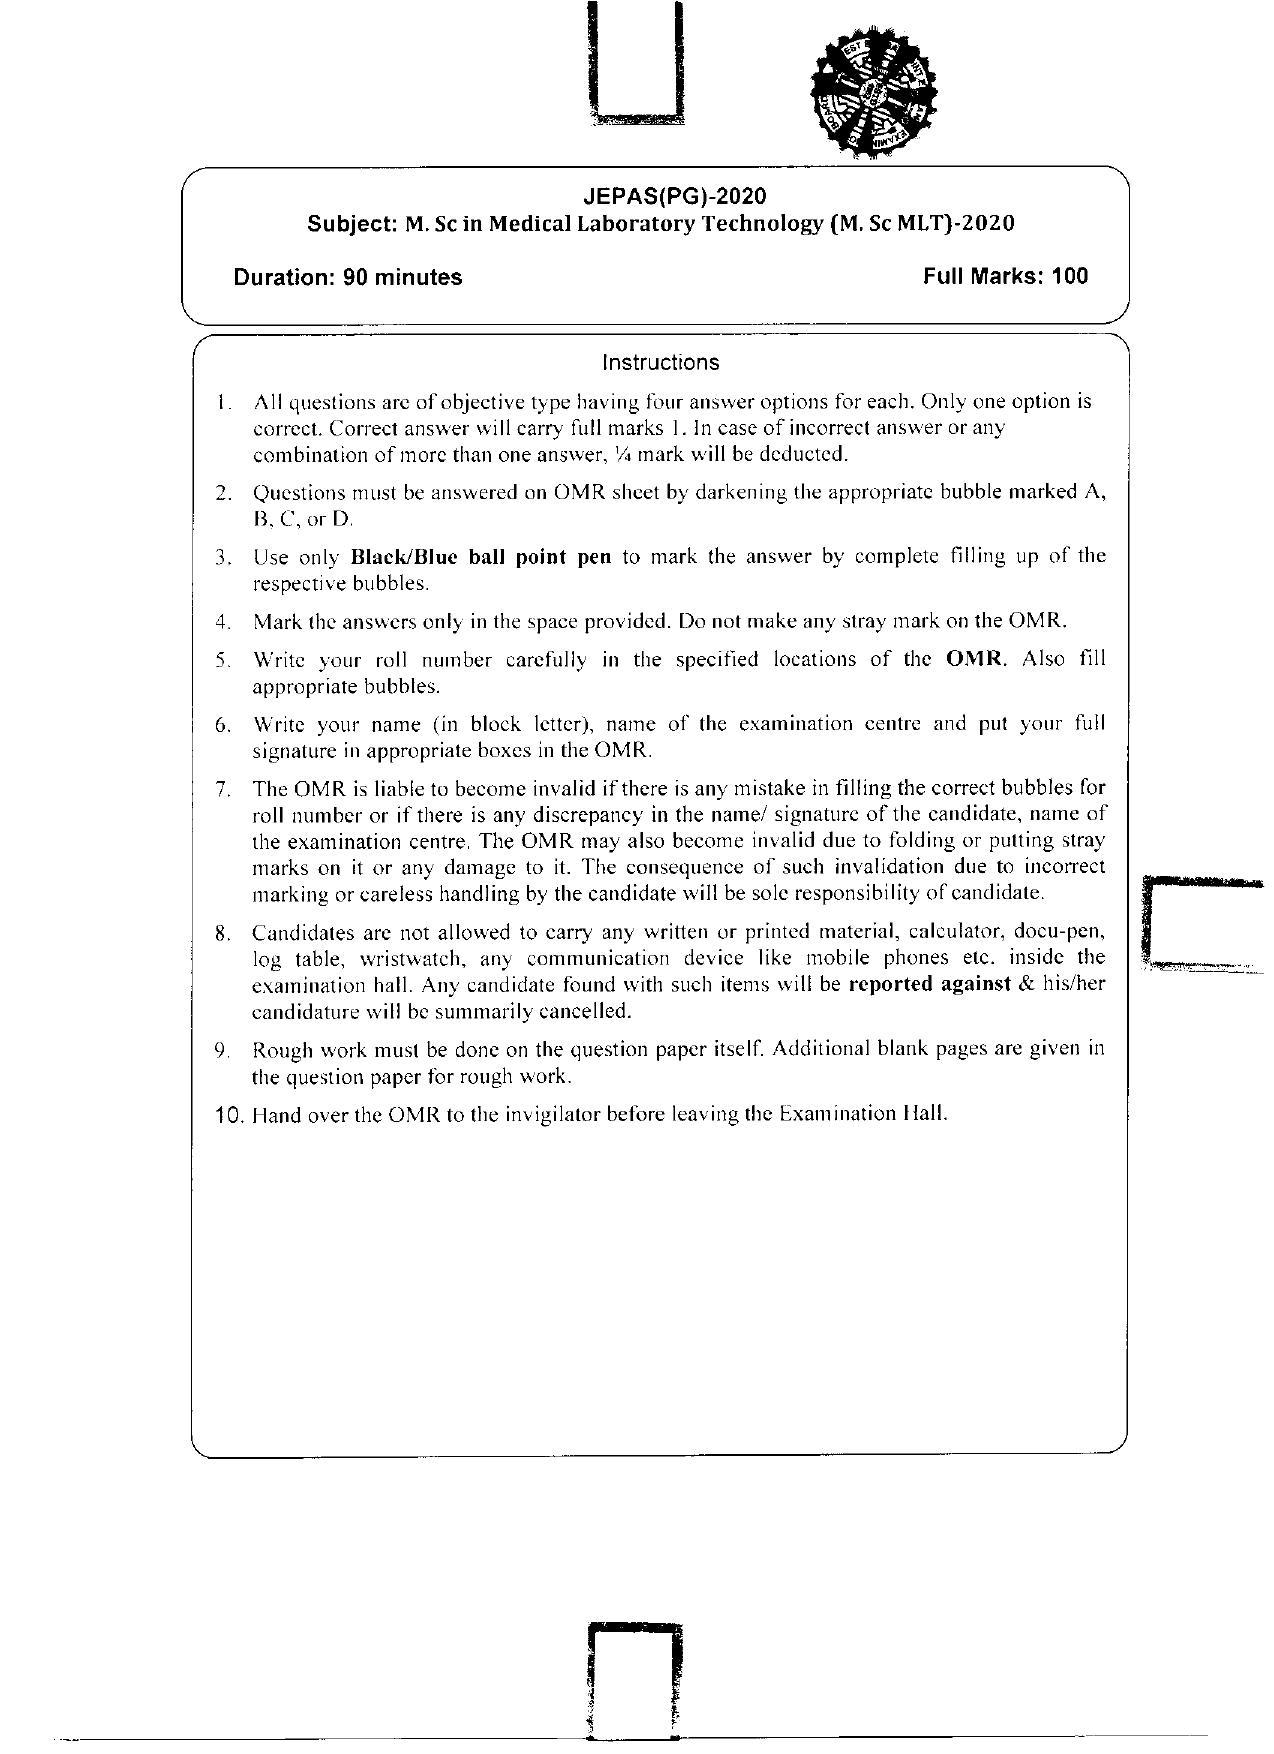 WBJEEB JEMAS (PG) 2020 MSc MLT Question Paper - Page 1